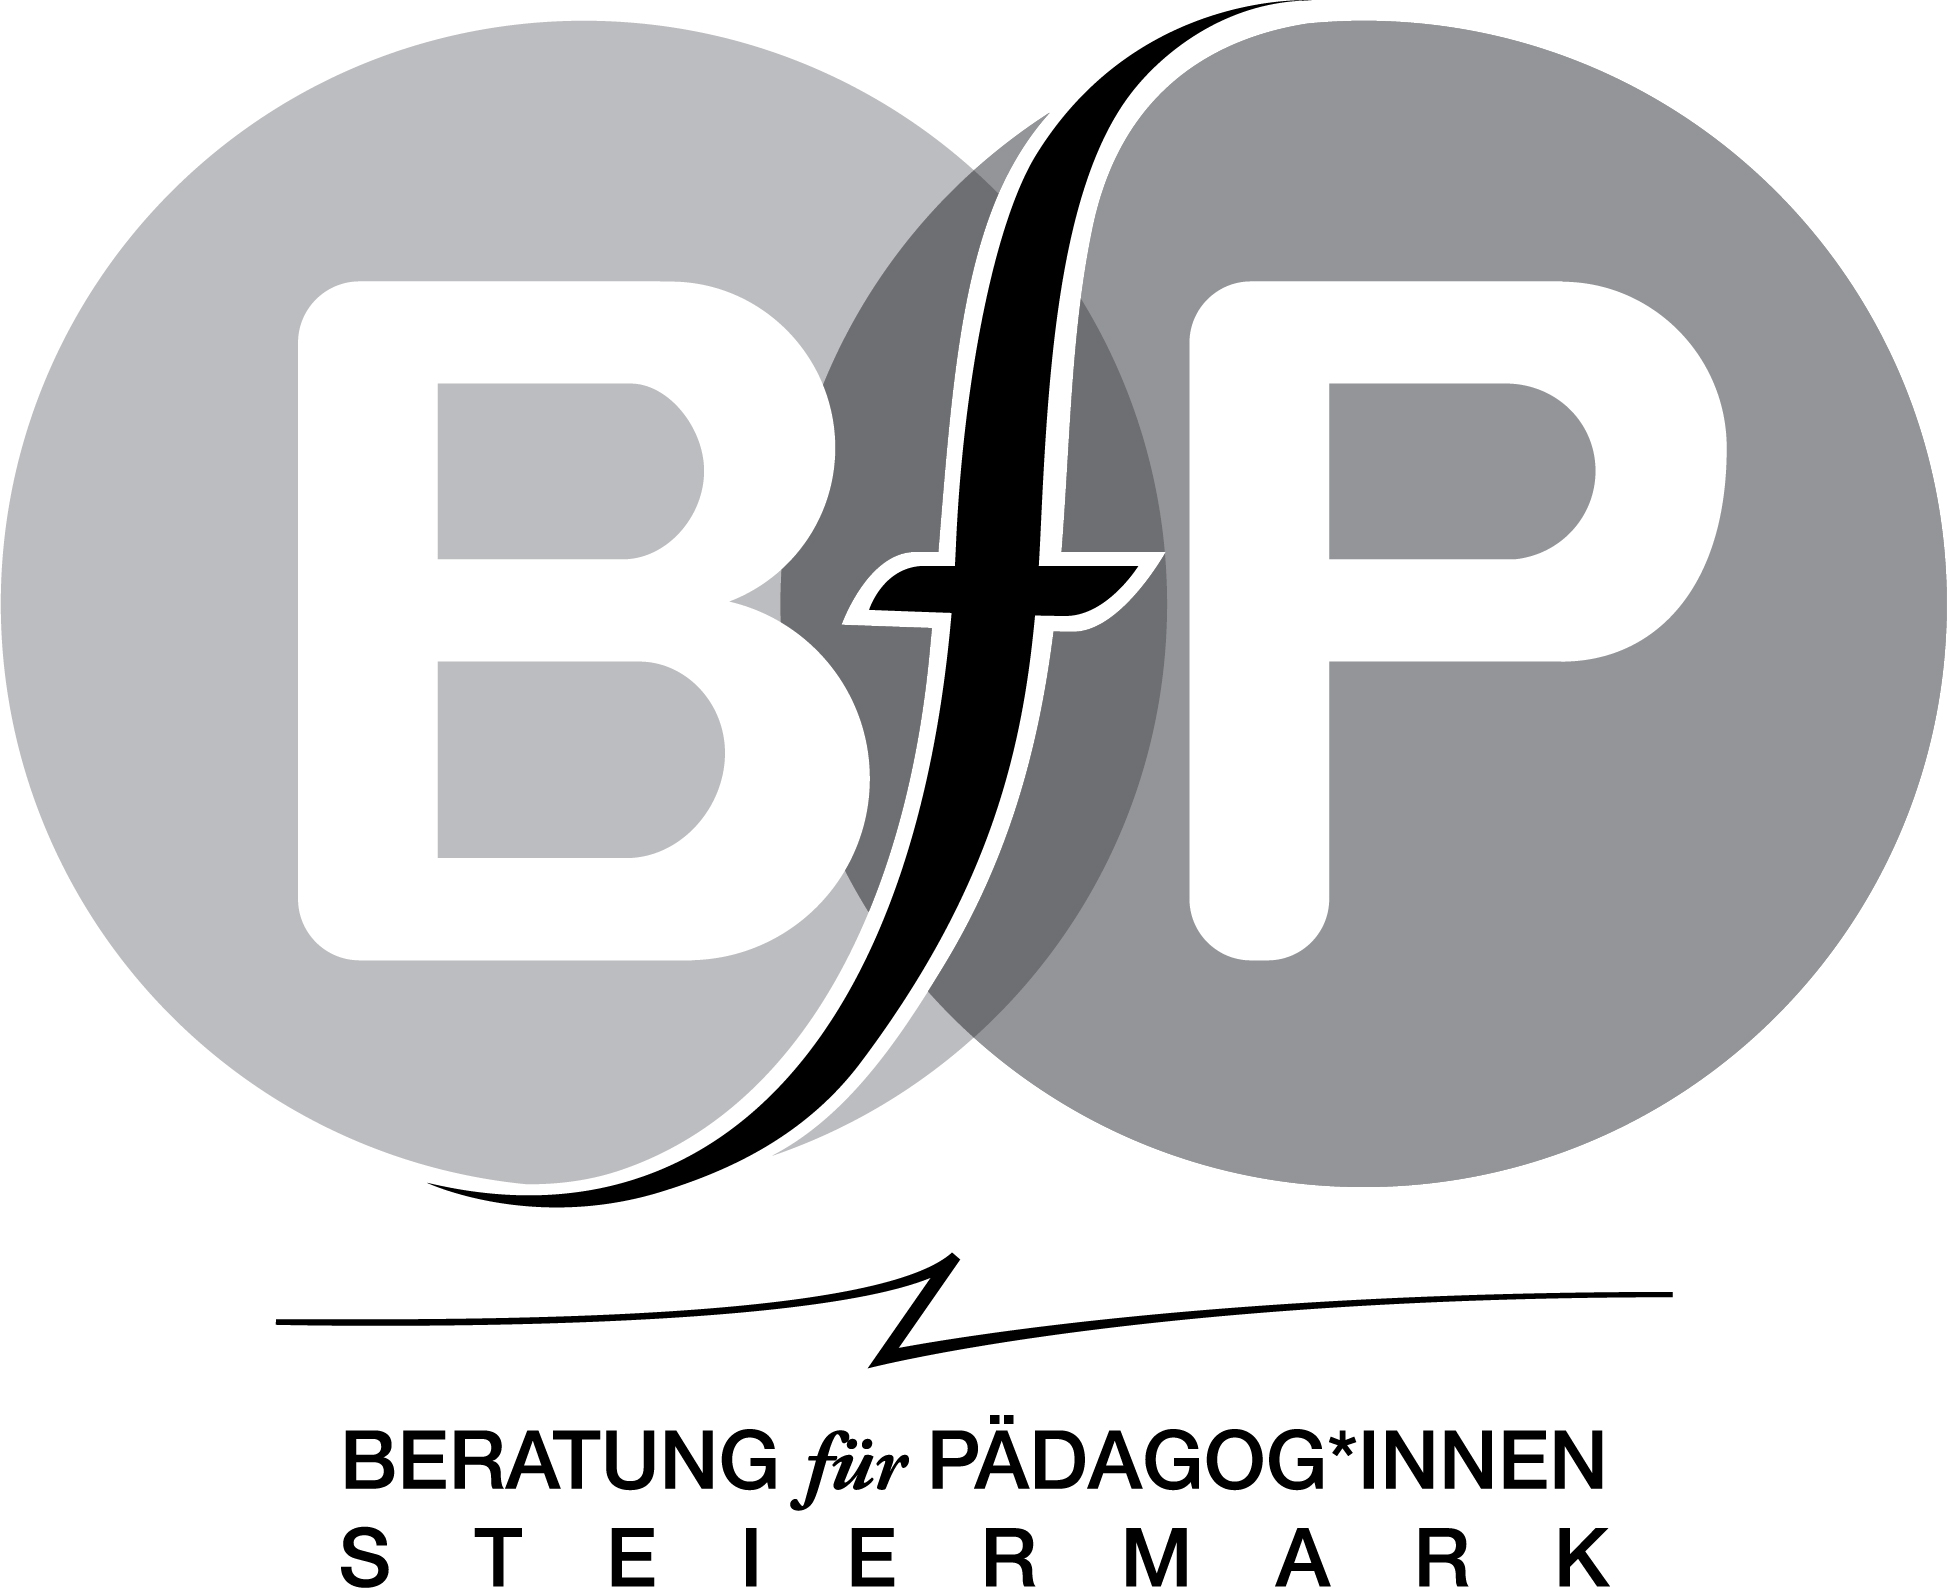 BfP Logo BnW on W RBG